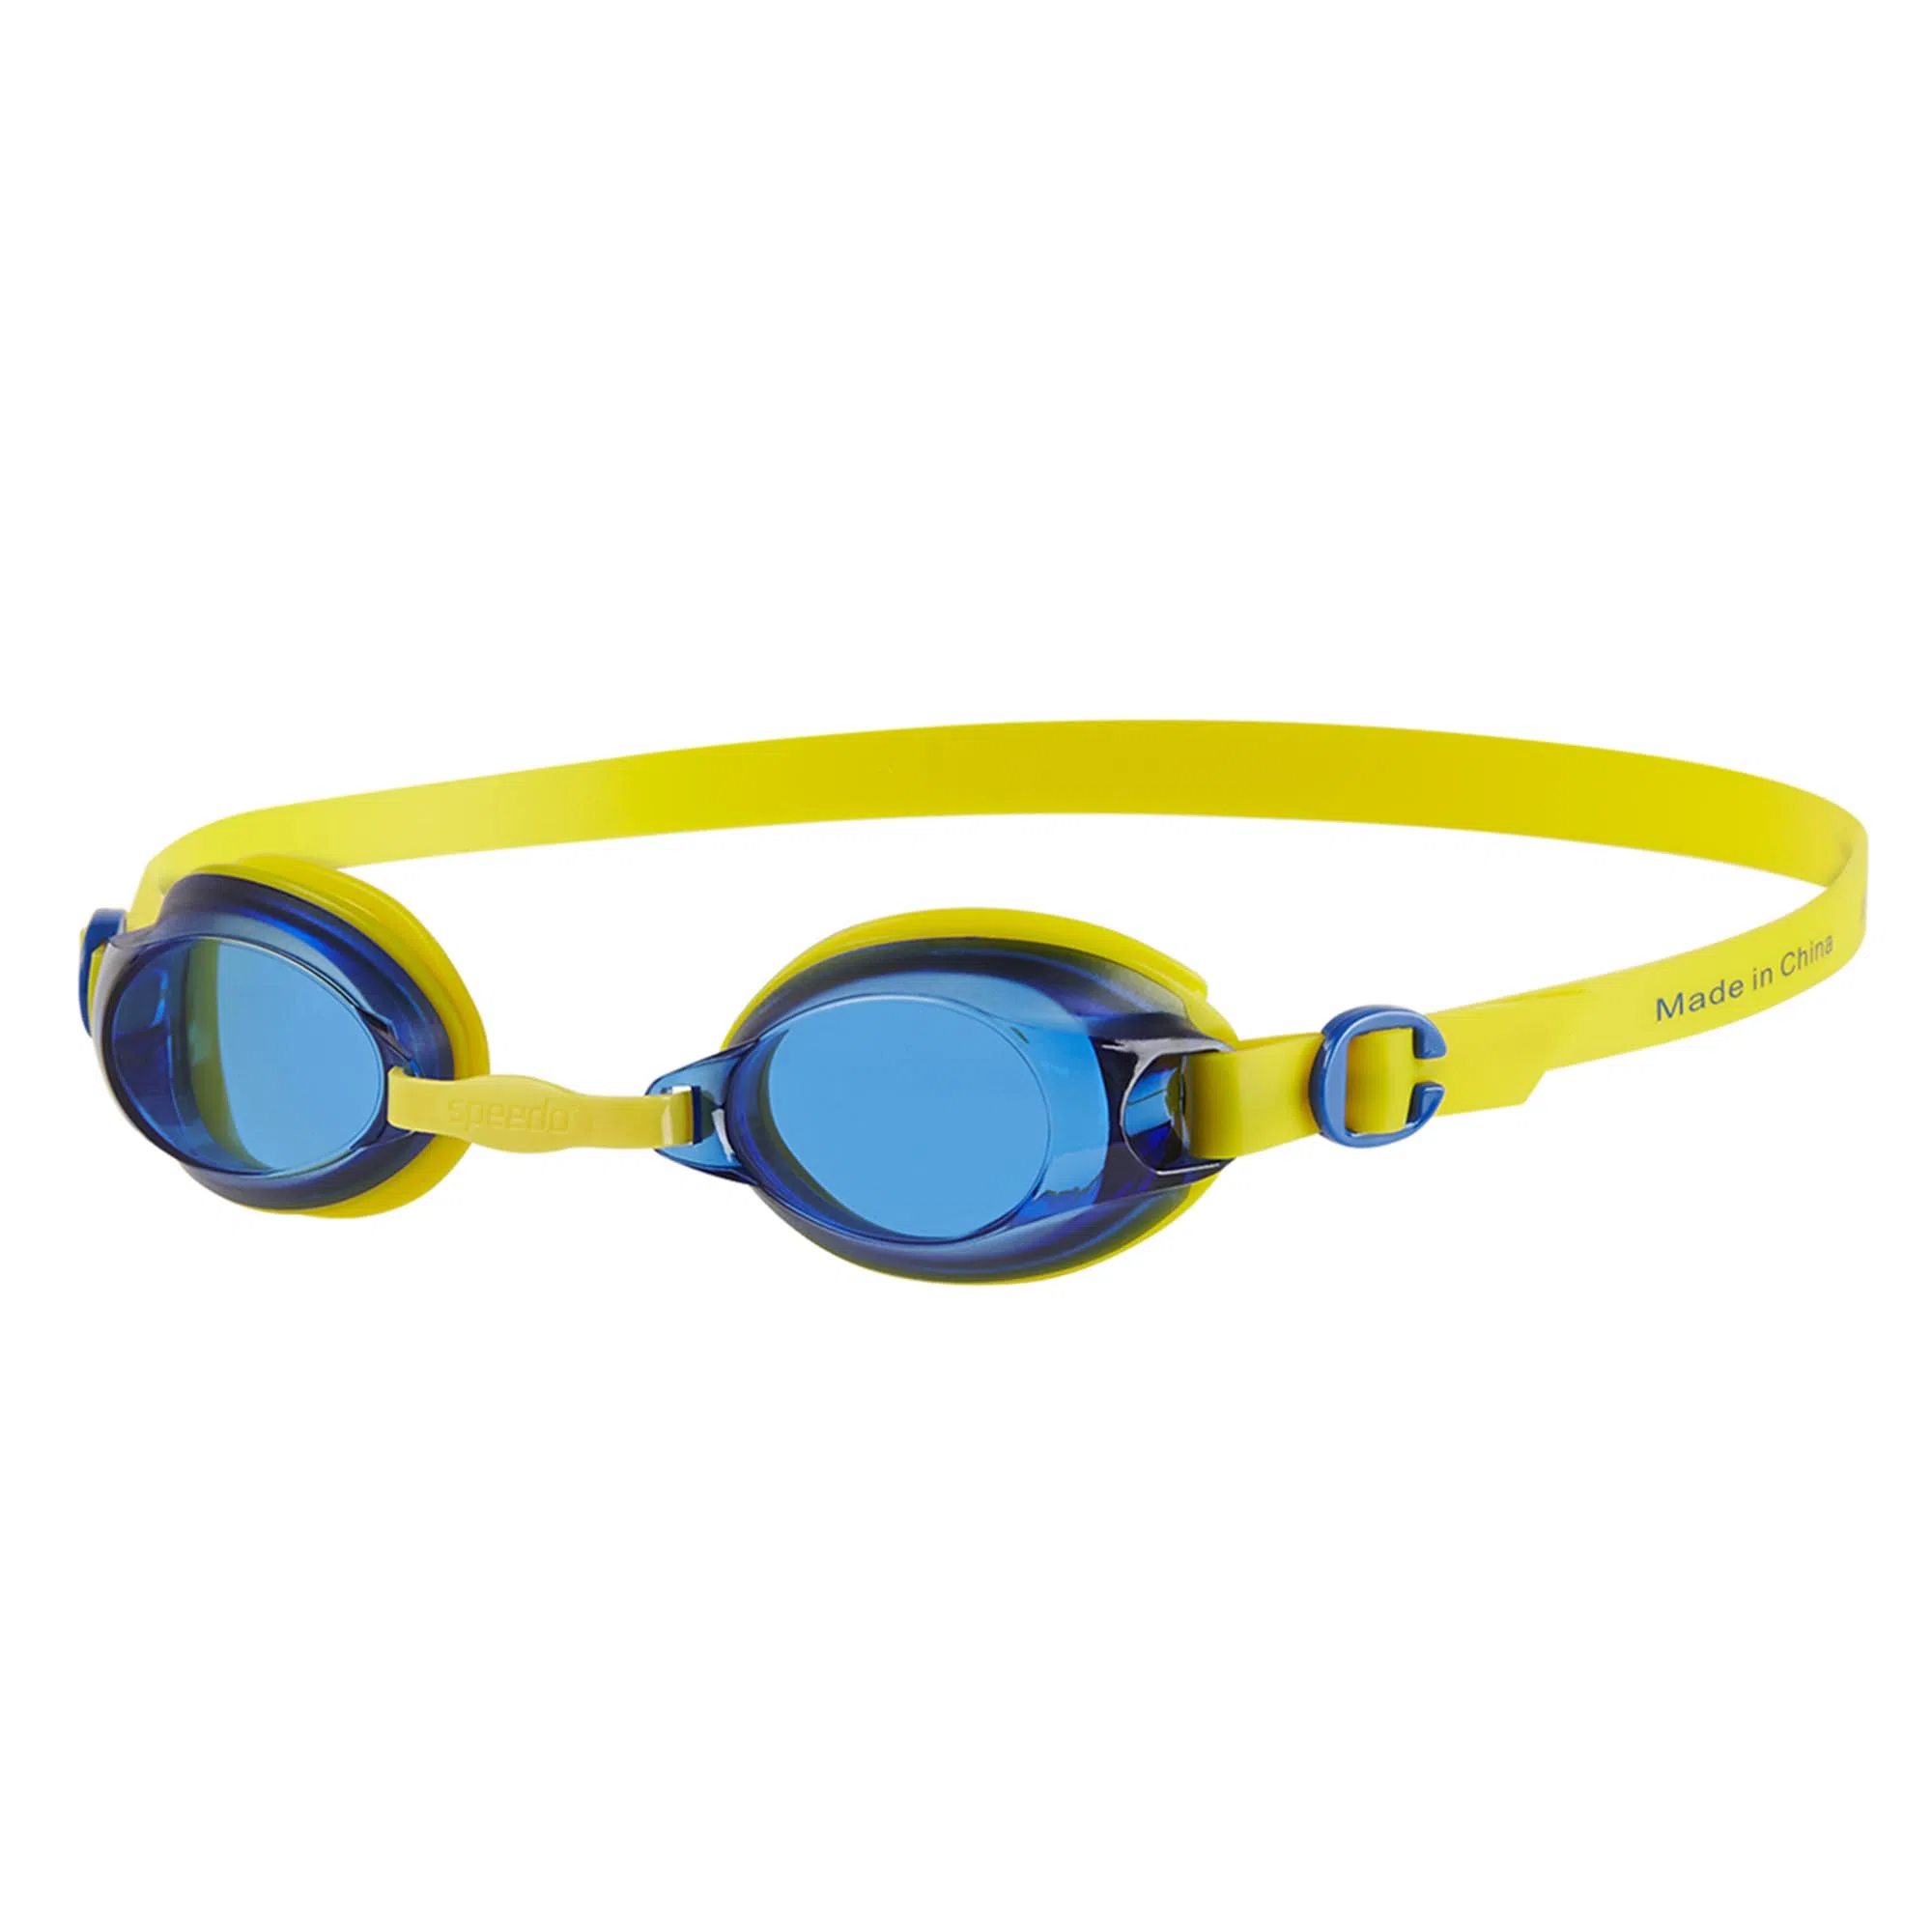 Gafas natación Speedo Infant Illusion azul amarillo niños